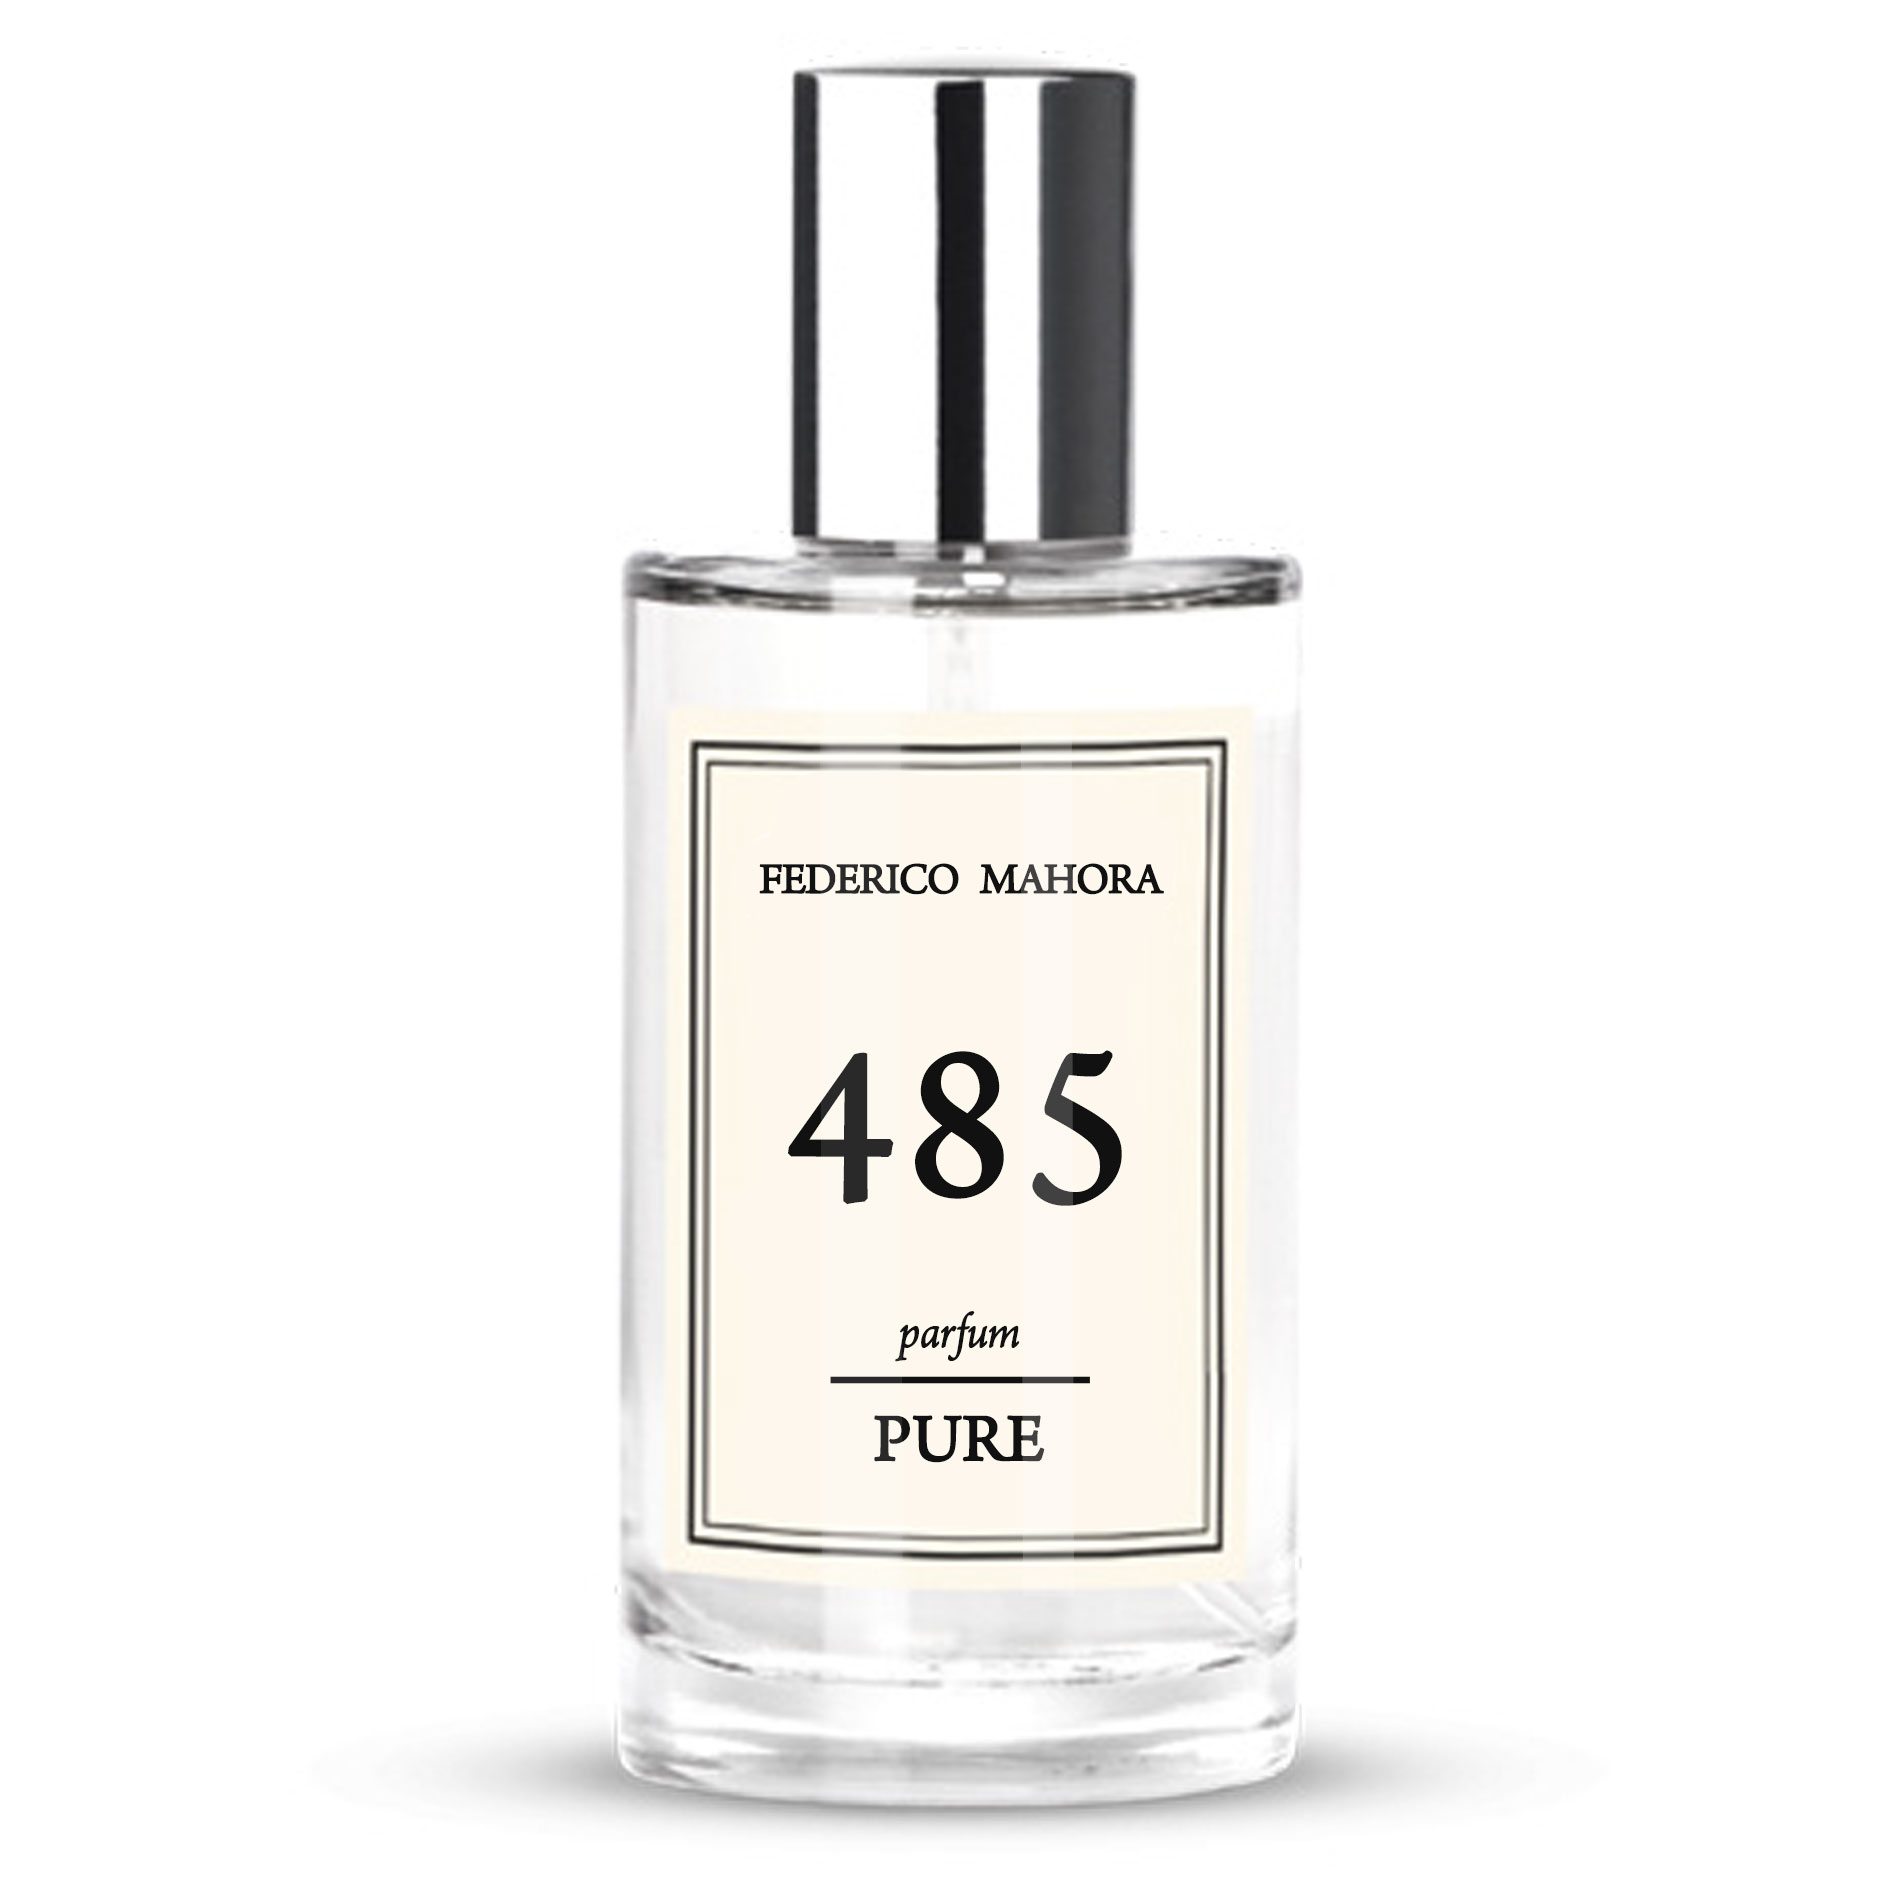 PURE 485 Parfum by Federico Mahora